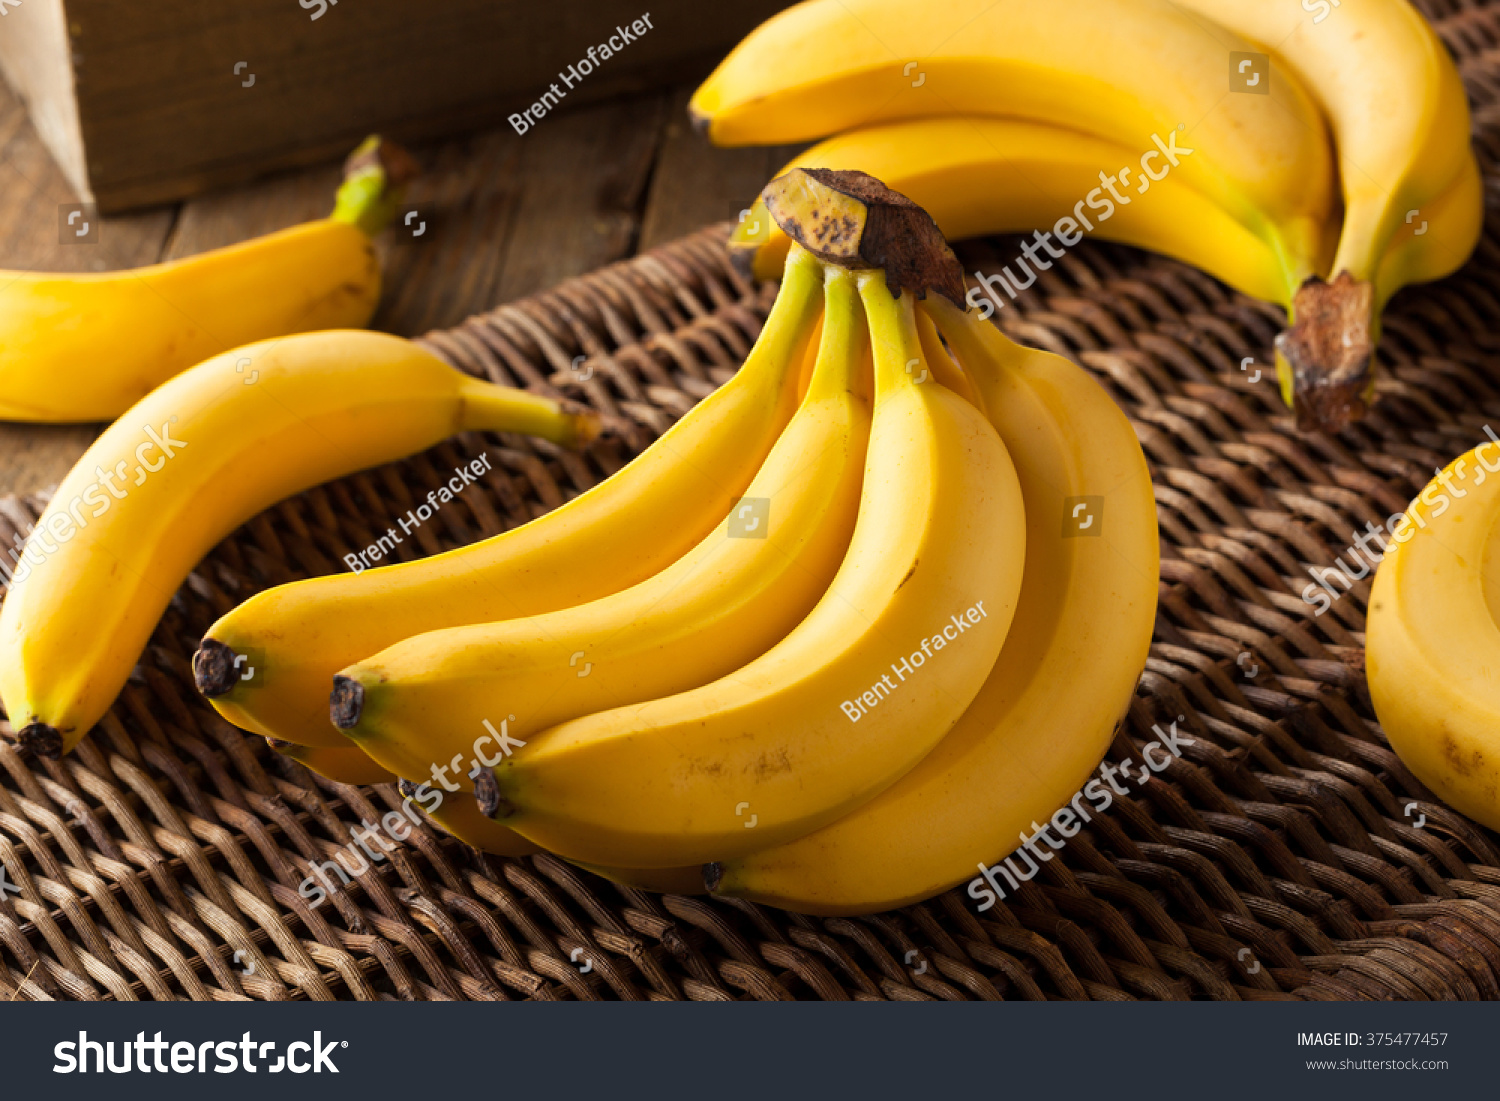 Raw Organic Bunch of Bananas Ready to Eat #375477457